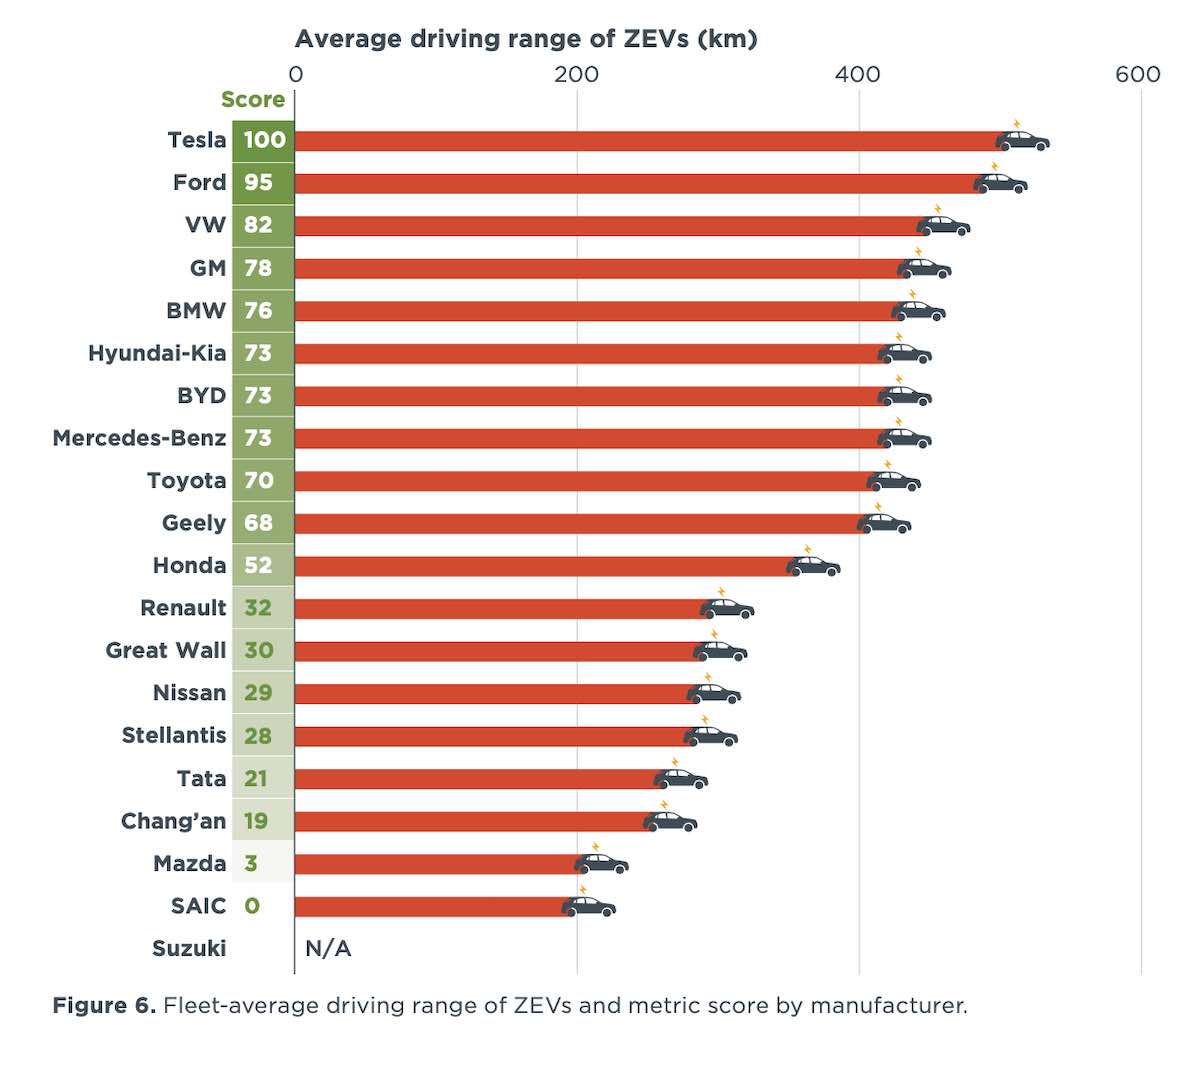 Fleet-average driving range of ZEVs and metric score by manufacturer